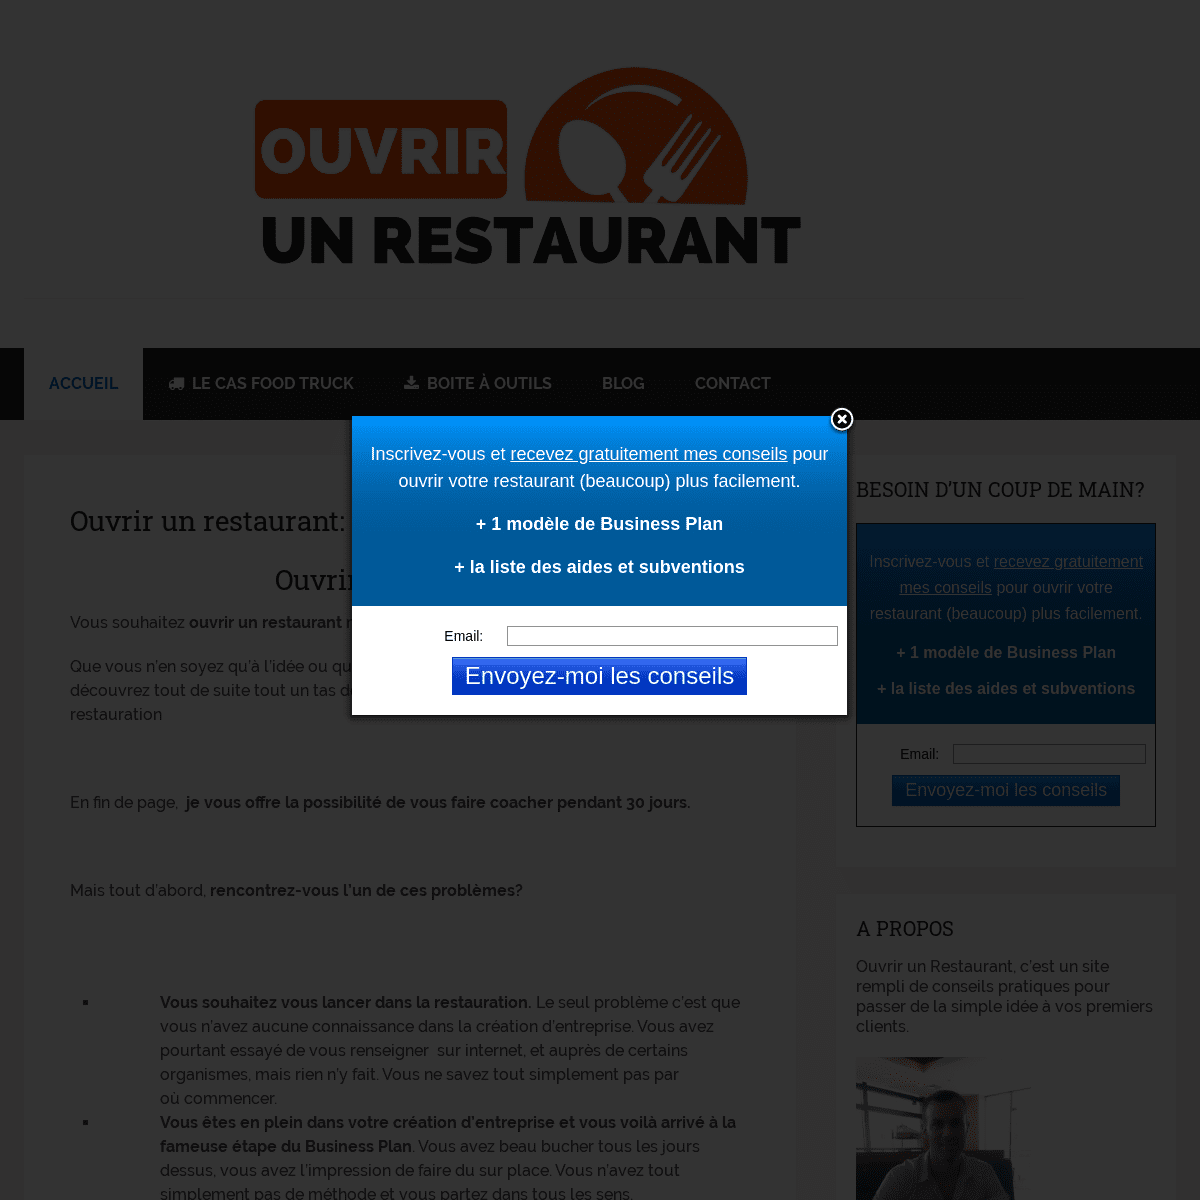 A complete backup of ouvrir-un-restaurant.com